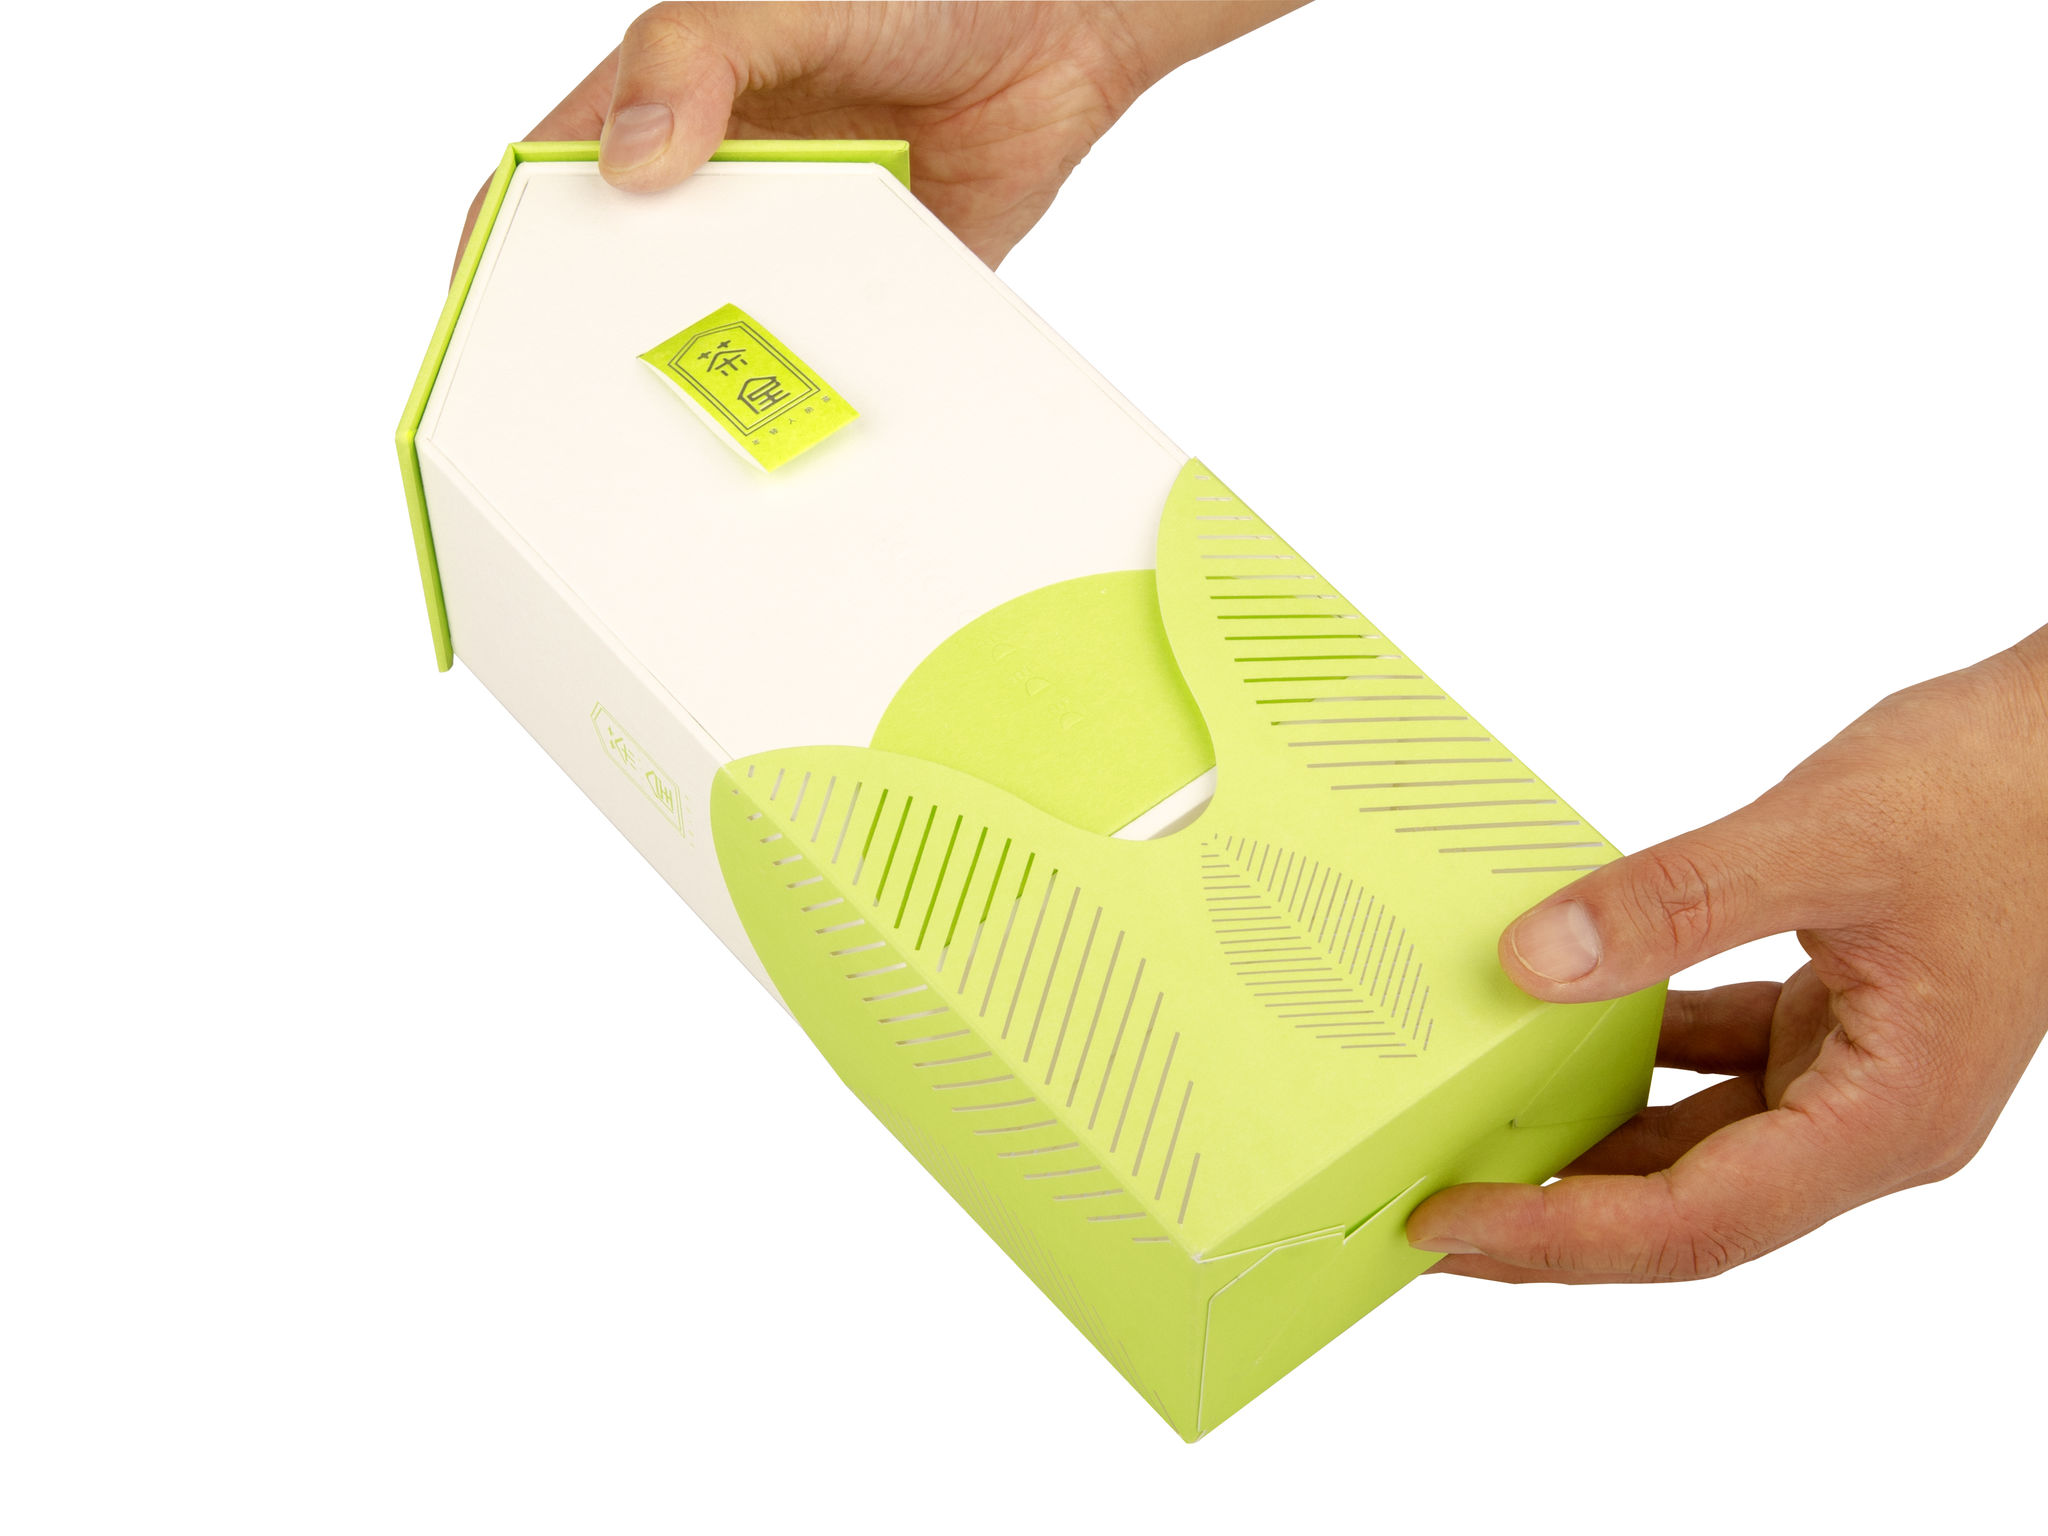 "Tea House" tea packaging